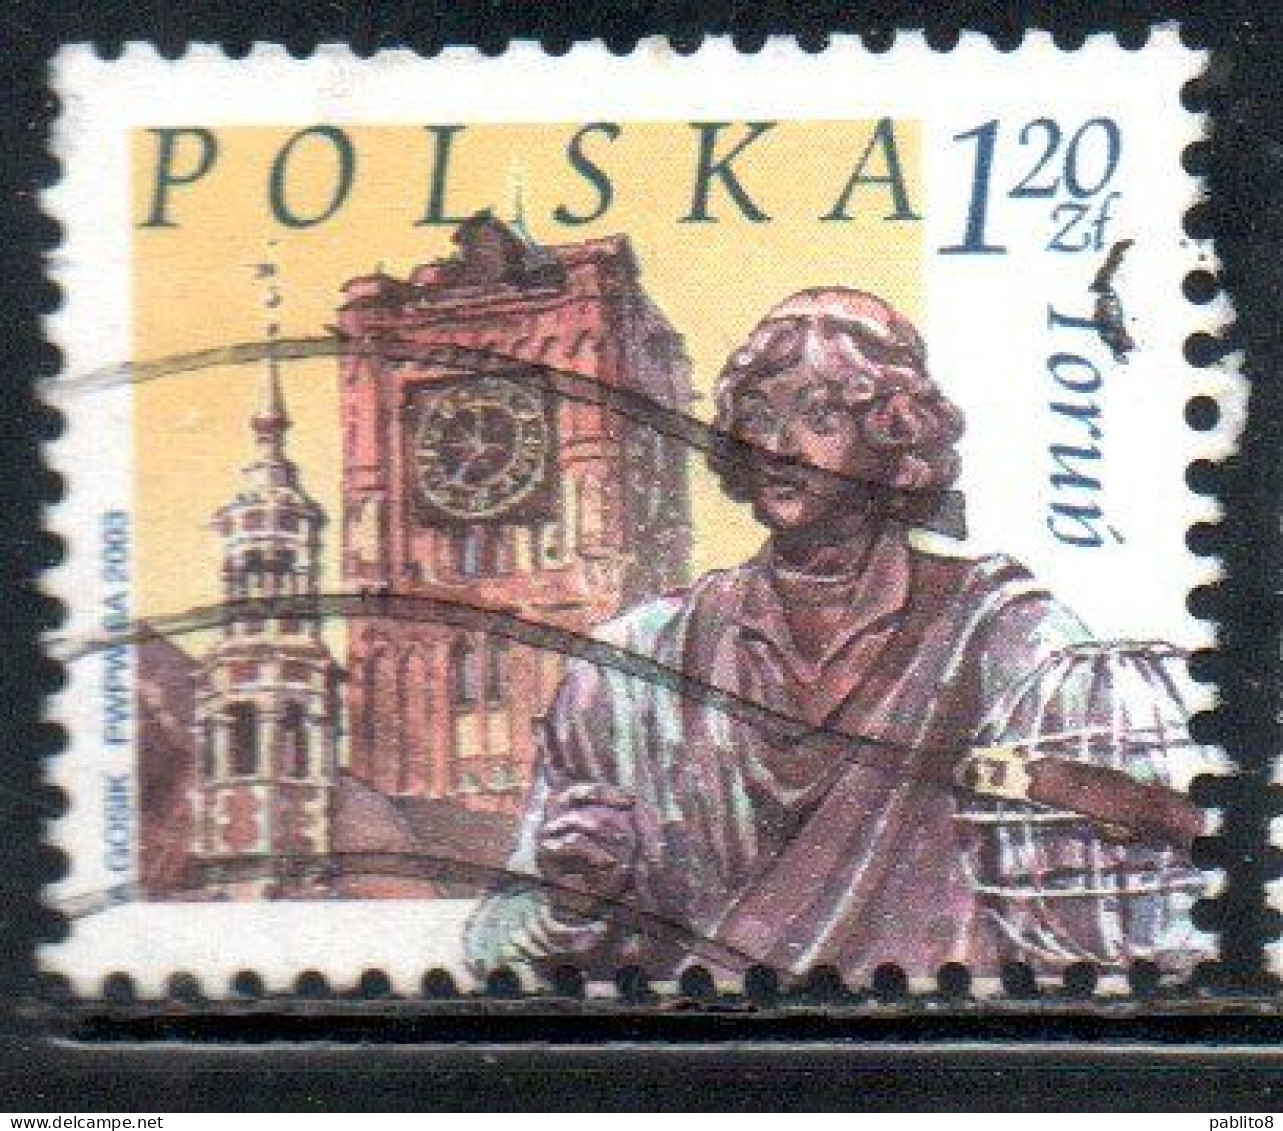 POLONIA POLAND POLSKA 2003 TOWER OF OLD CITY HALL STATUE OF NICOLAUS COPERNICUS TORUN 1.20z USED USATO OBLITERE' - Oblitérés